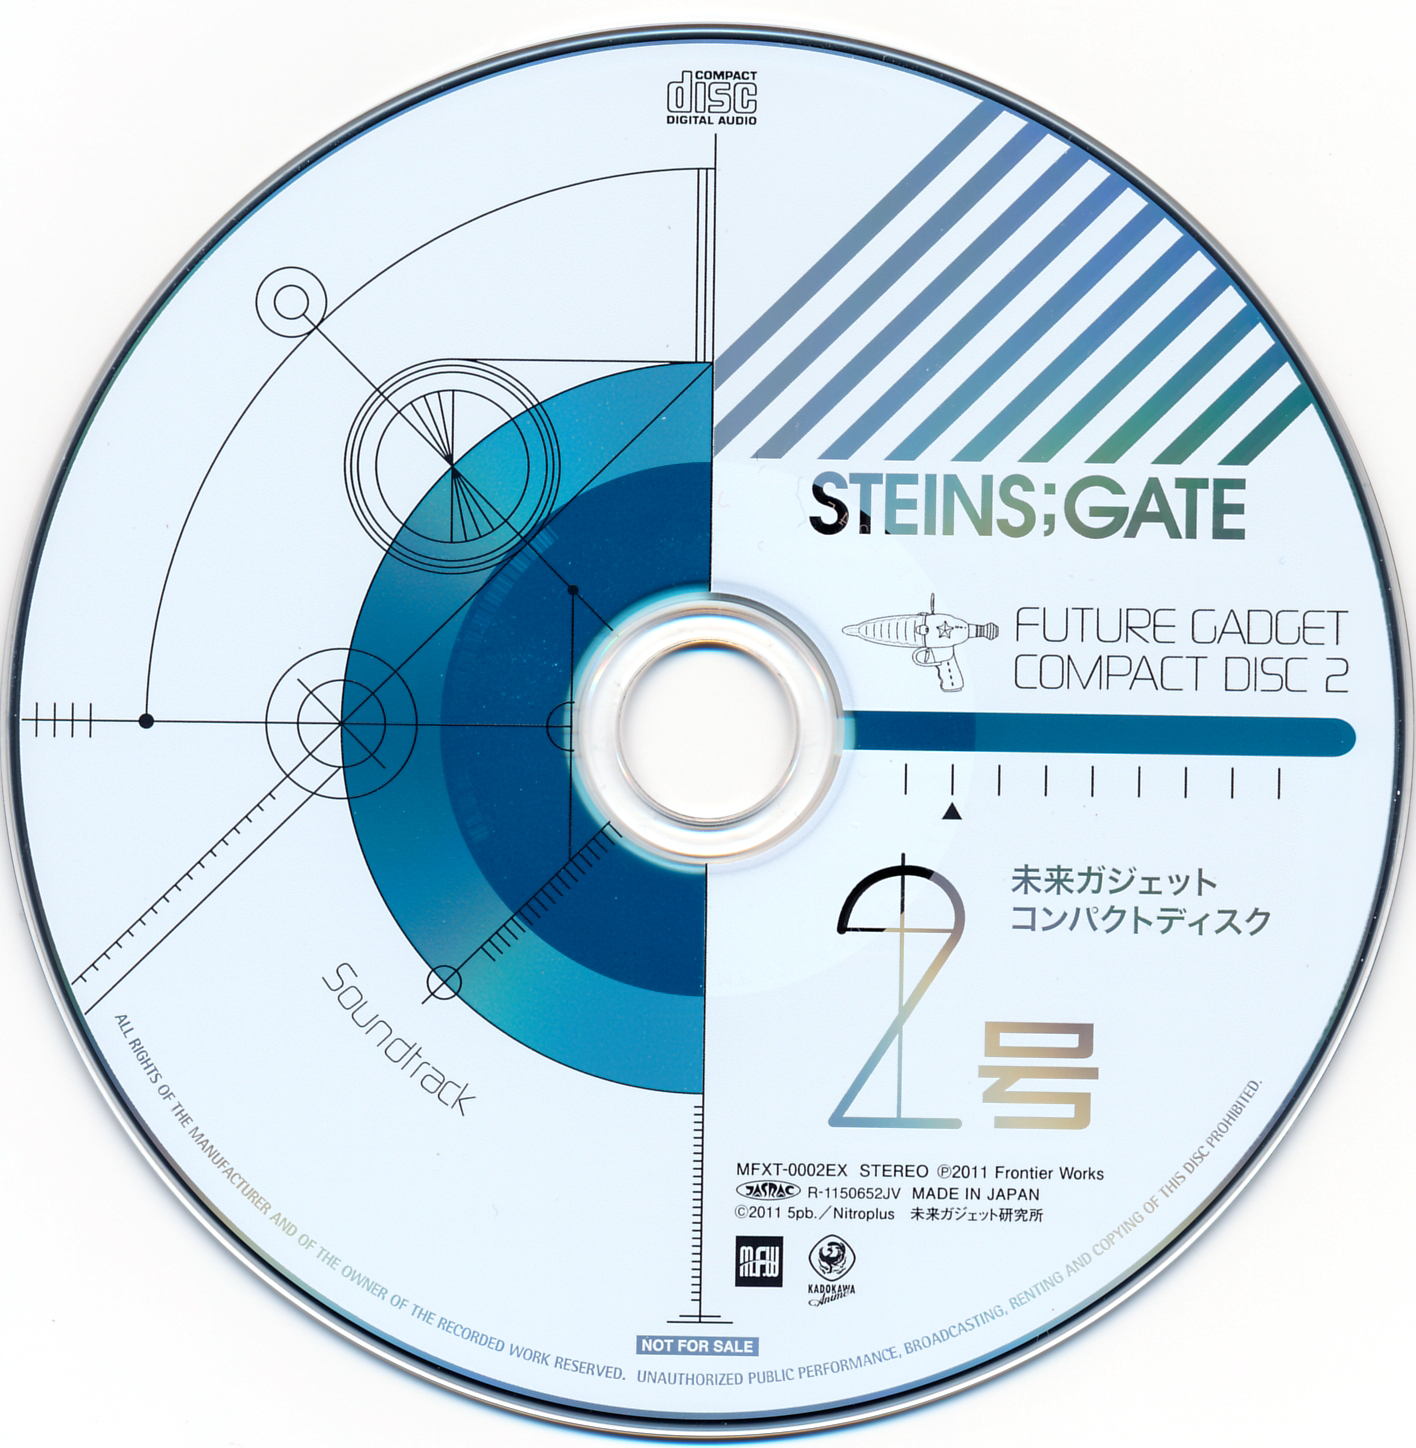 光碟-STEINS;GATE FUTURE GADGET COMPACT DISC 2.jpg